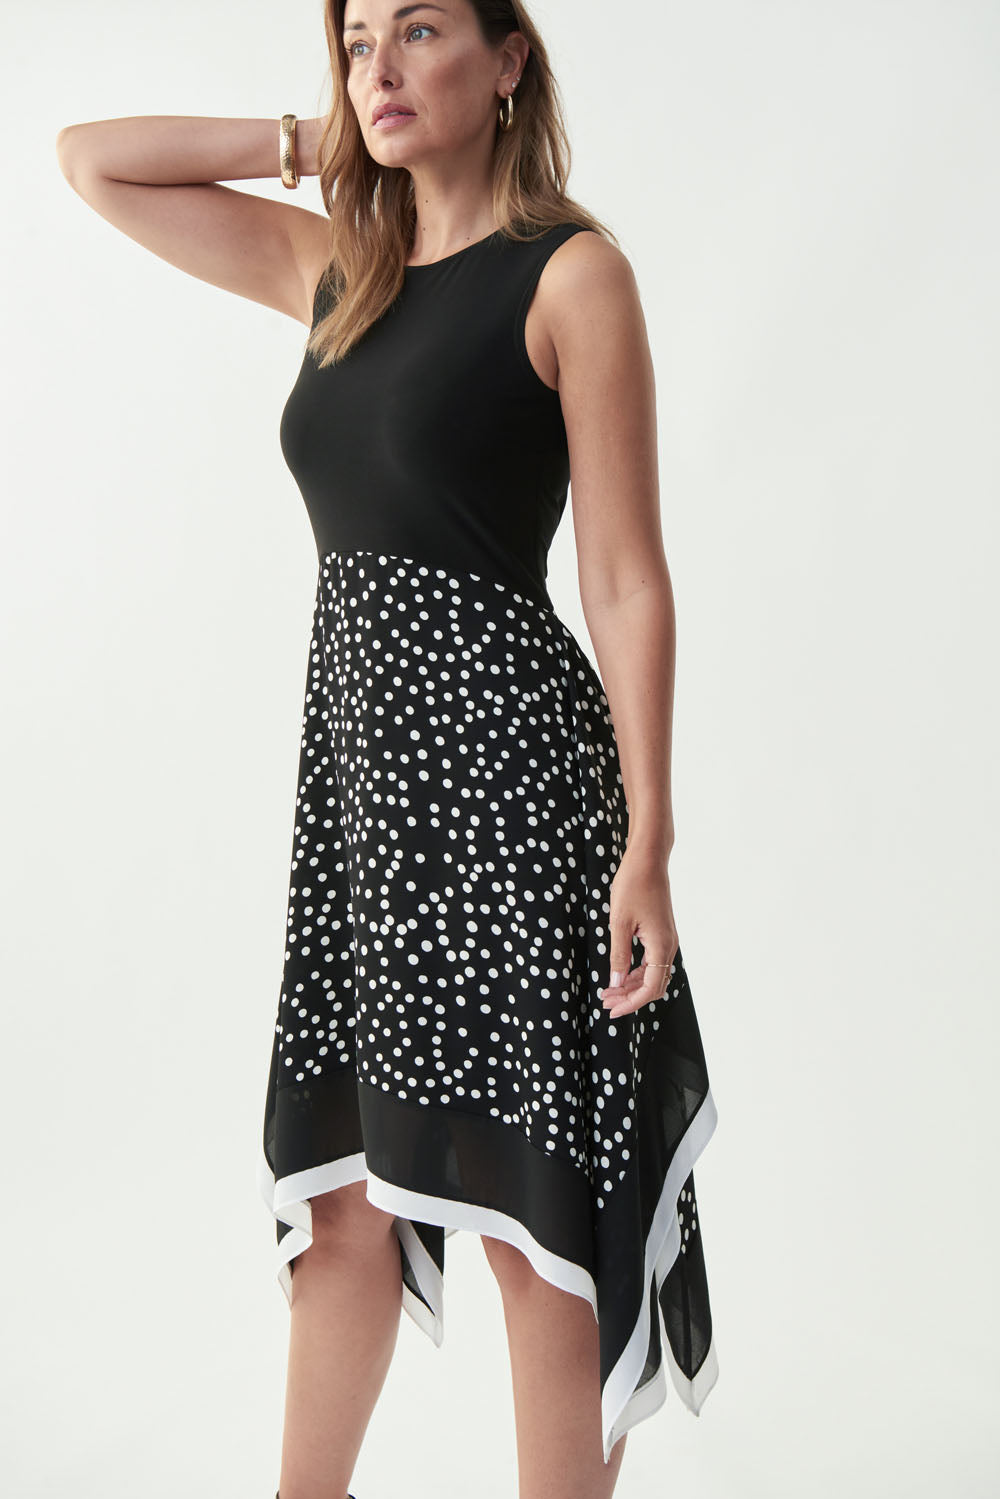 Joseph Ribkoff Black-Vanilla Polka Dot A-line Dress Style 221360